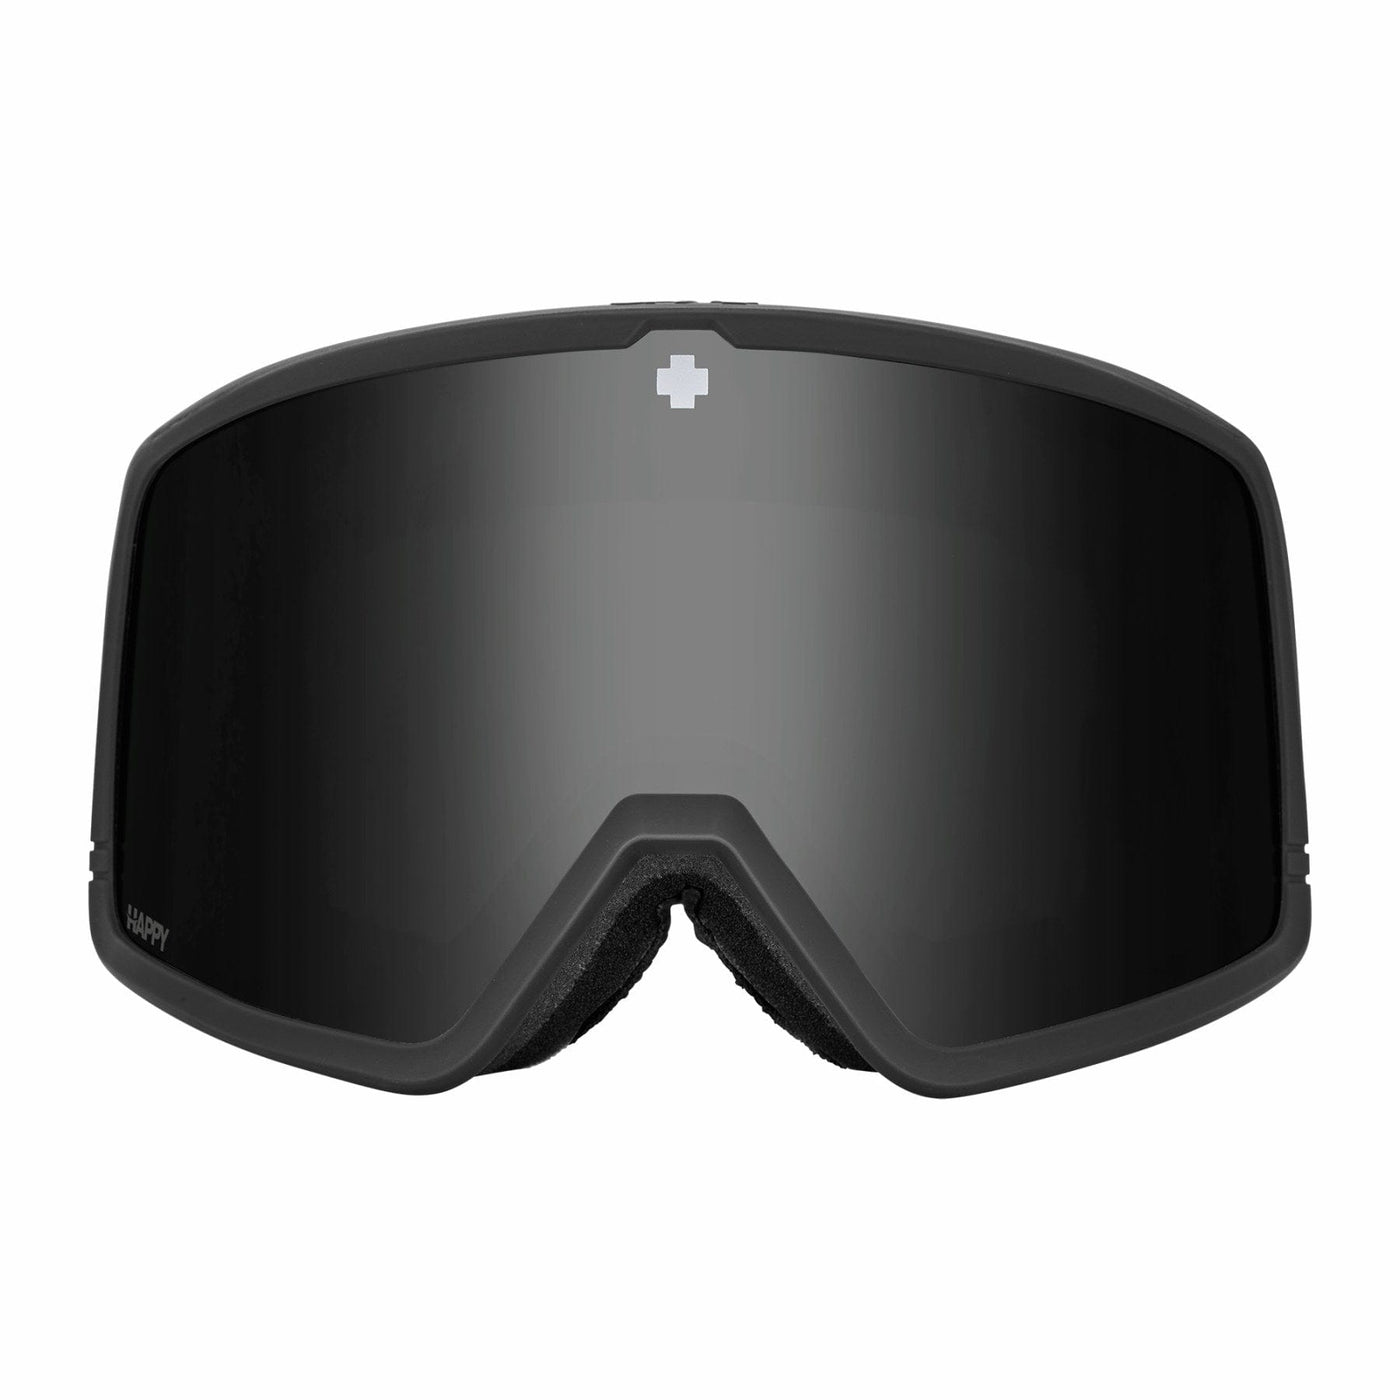 SPY snow goggles lens - black